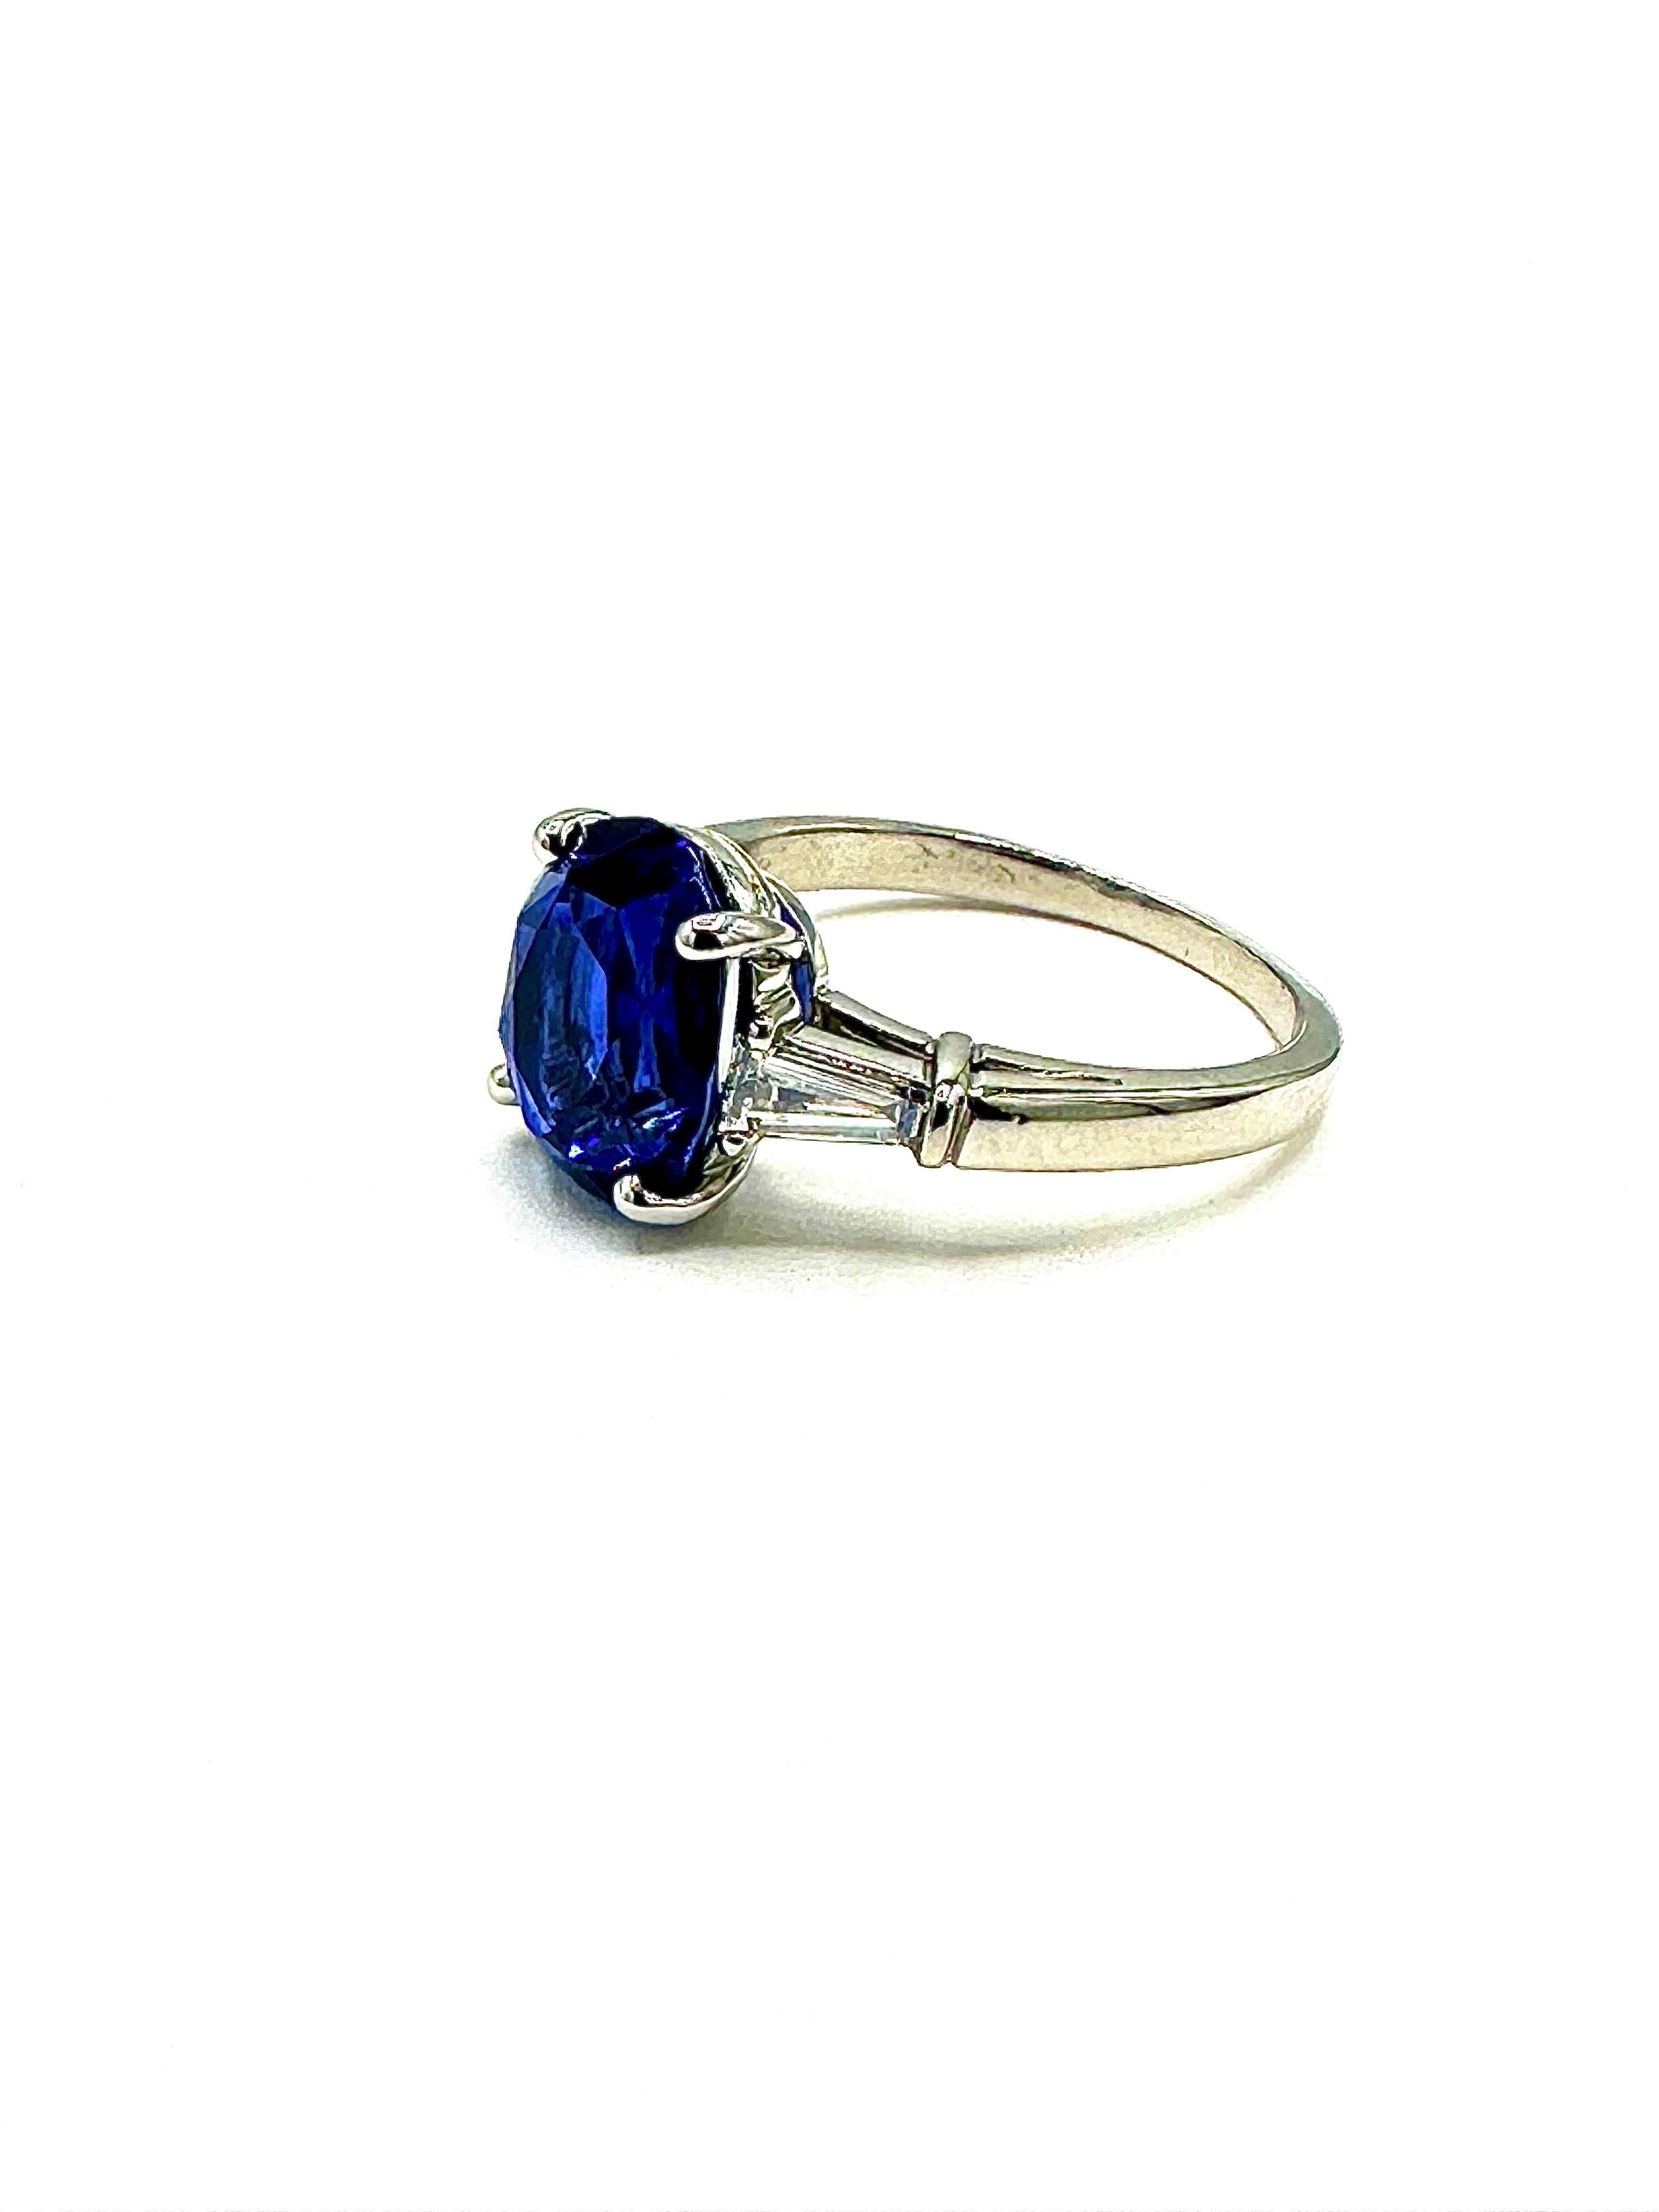 Oval Cut Oscar Heyman 4.82 Carat Sapphire and Diamond Platinum Ring For Sale